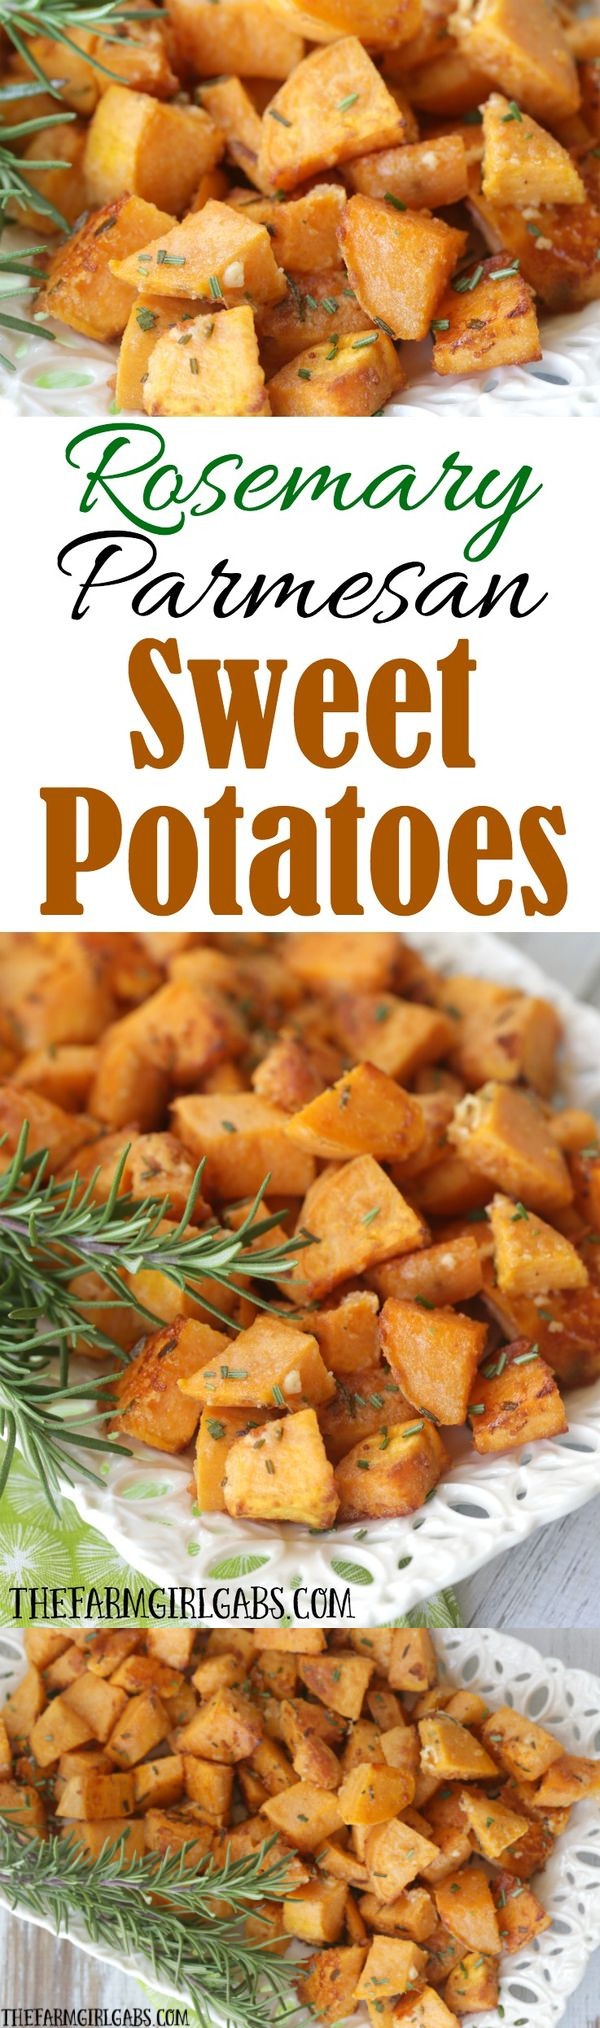 Rosemary Parmesan Sweet Potatoes